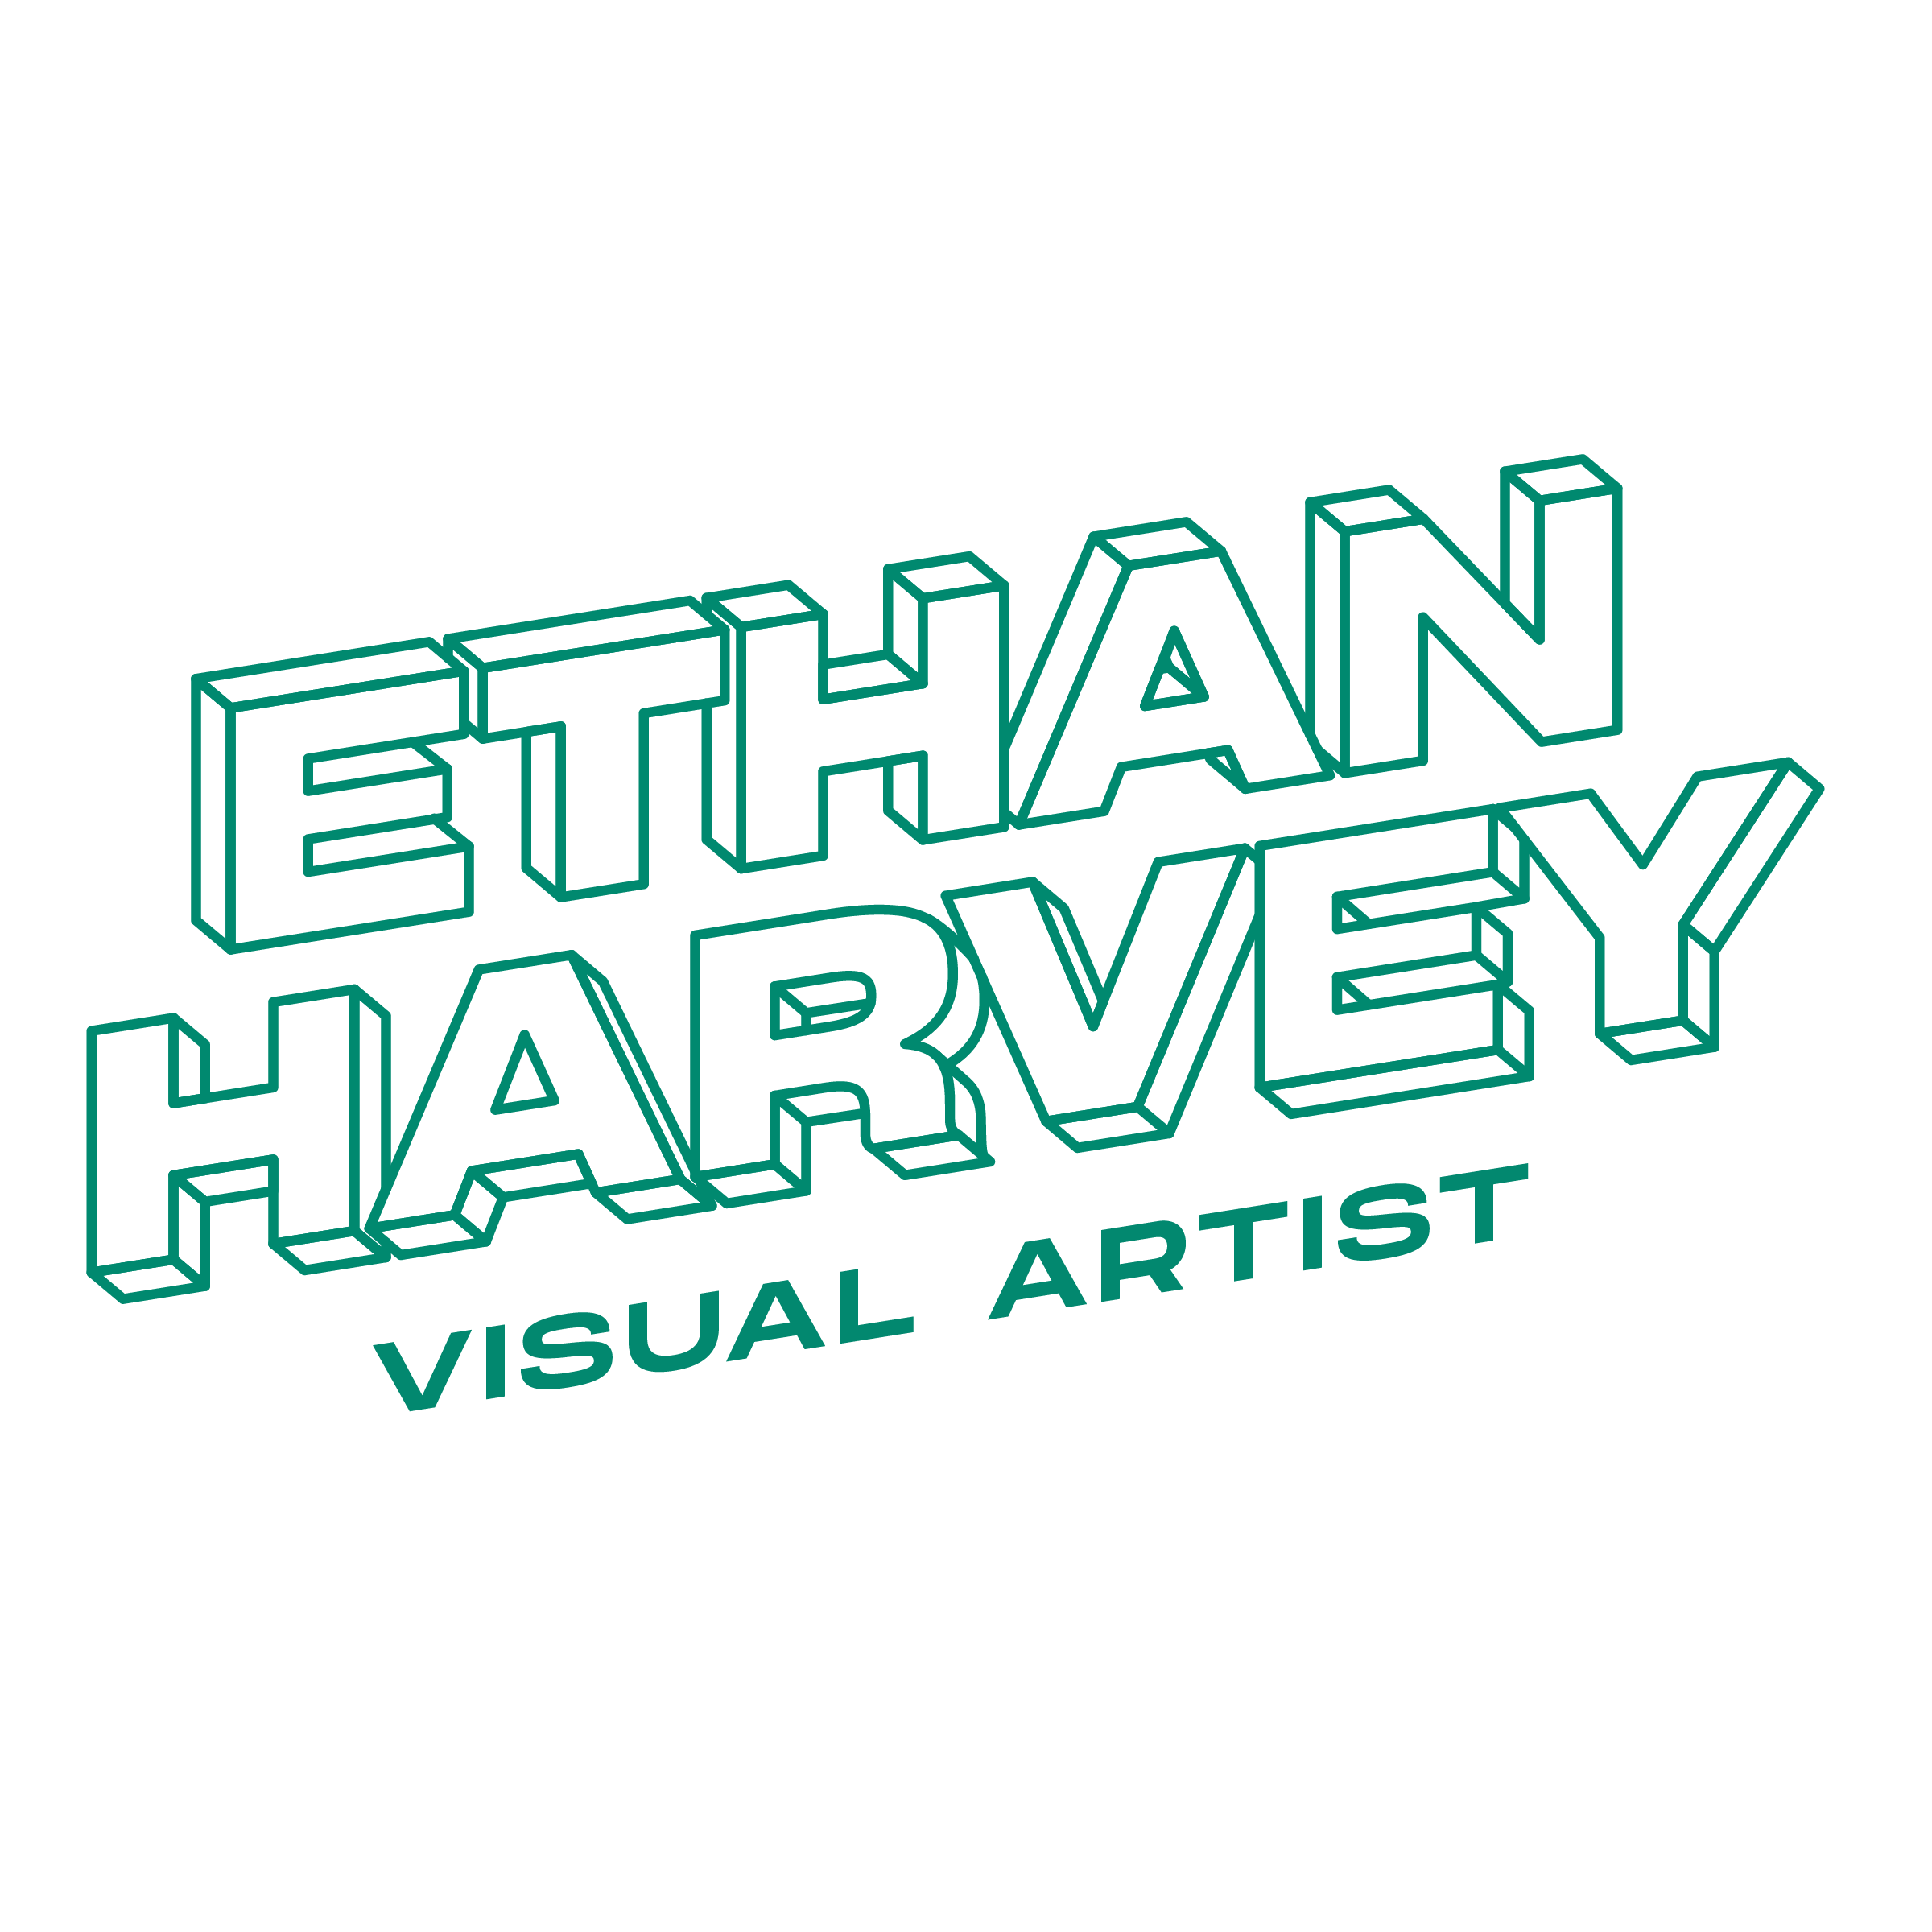 Ethan Harvey